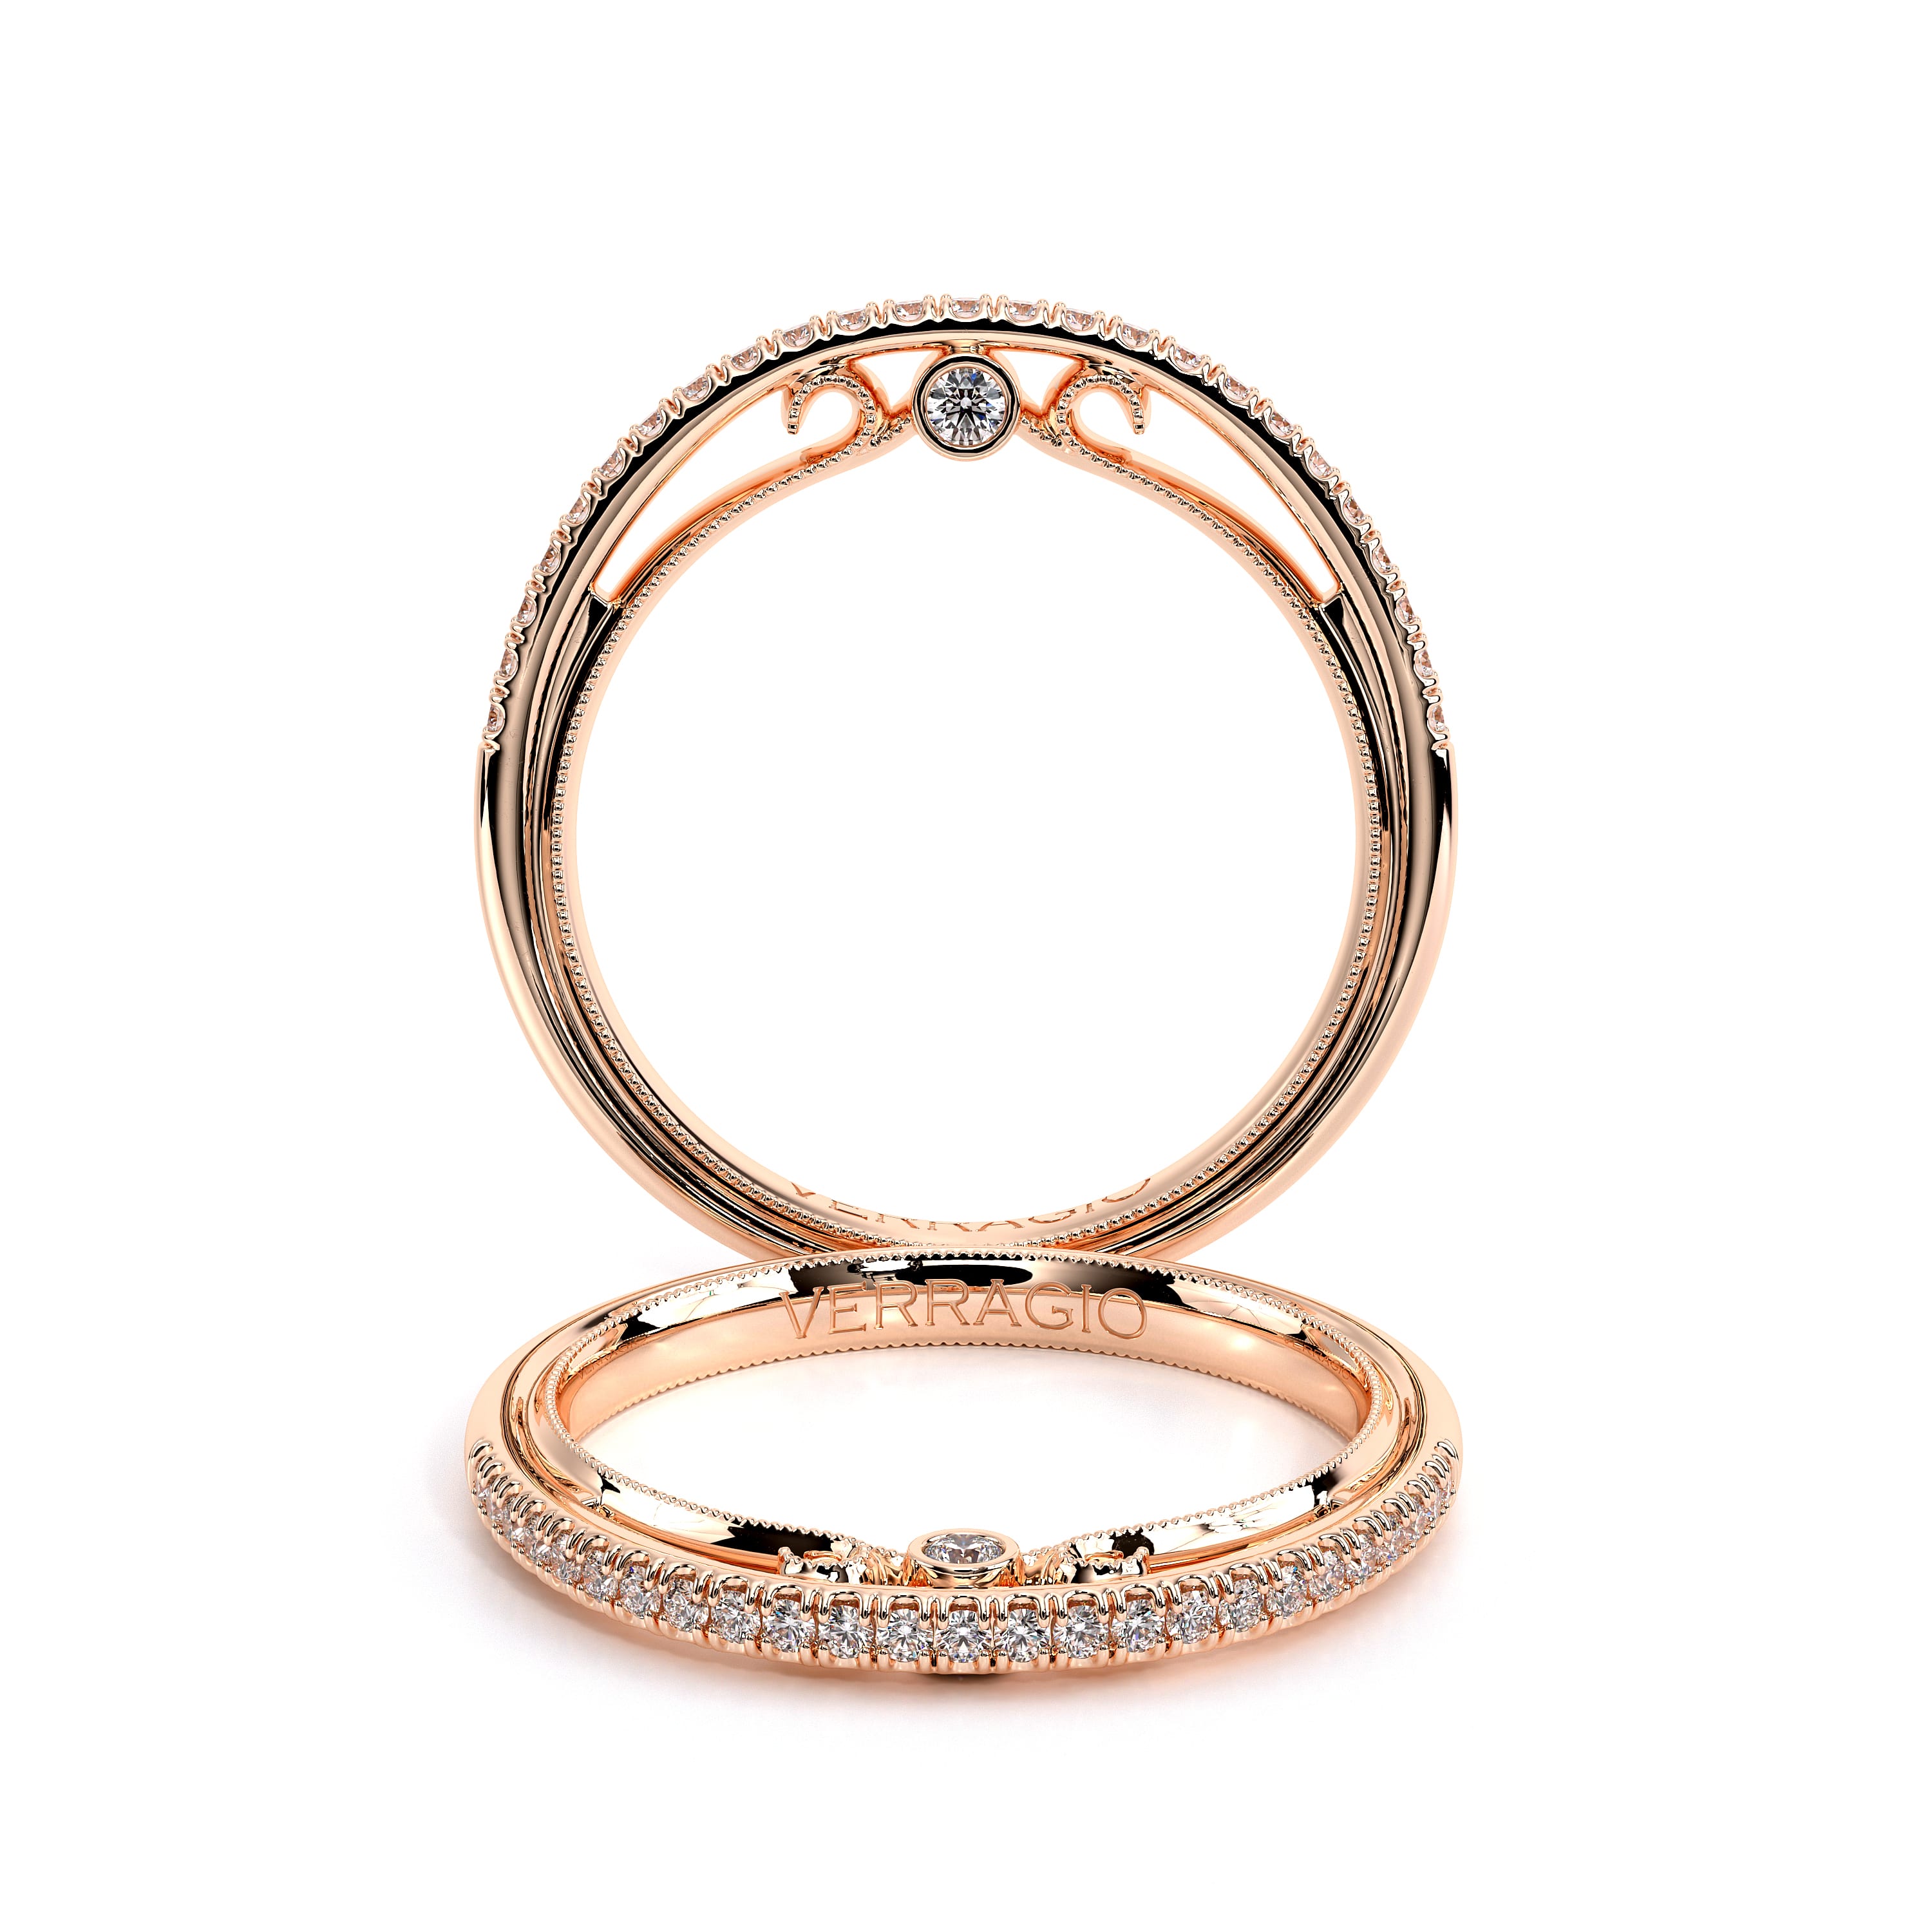 Verragio Floral Rose Gold Diamond Engagement Ring. Arthur's Jewelers